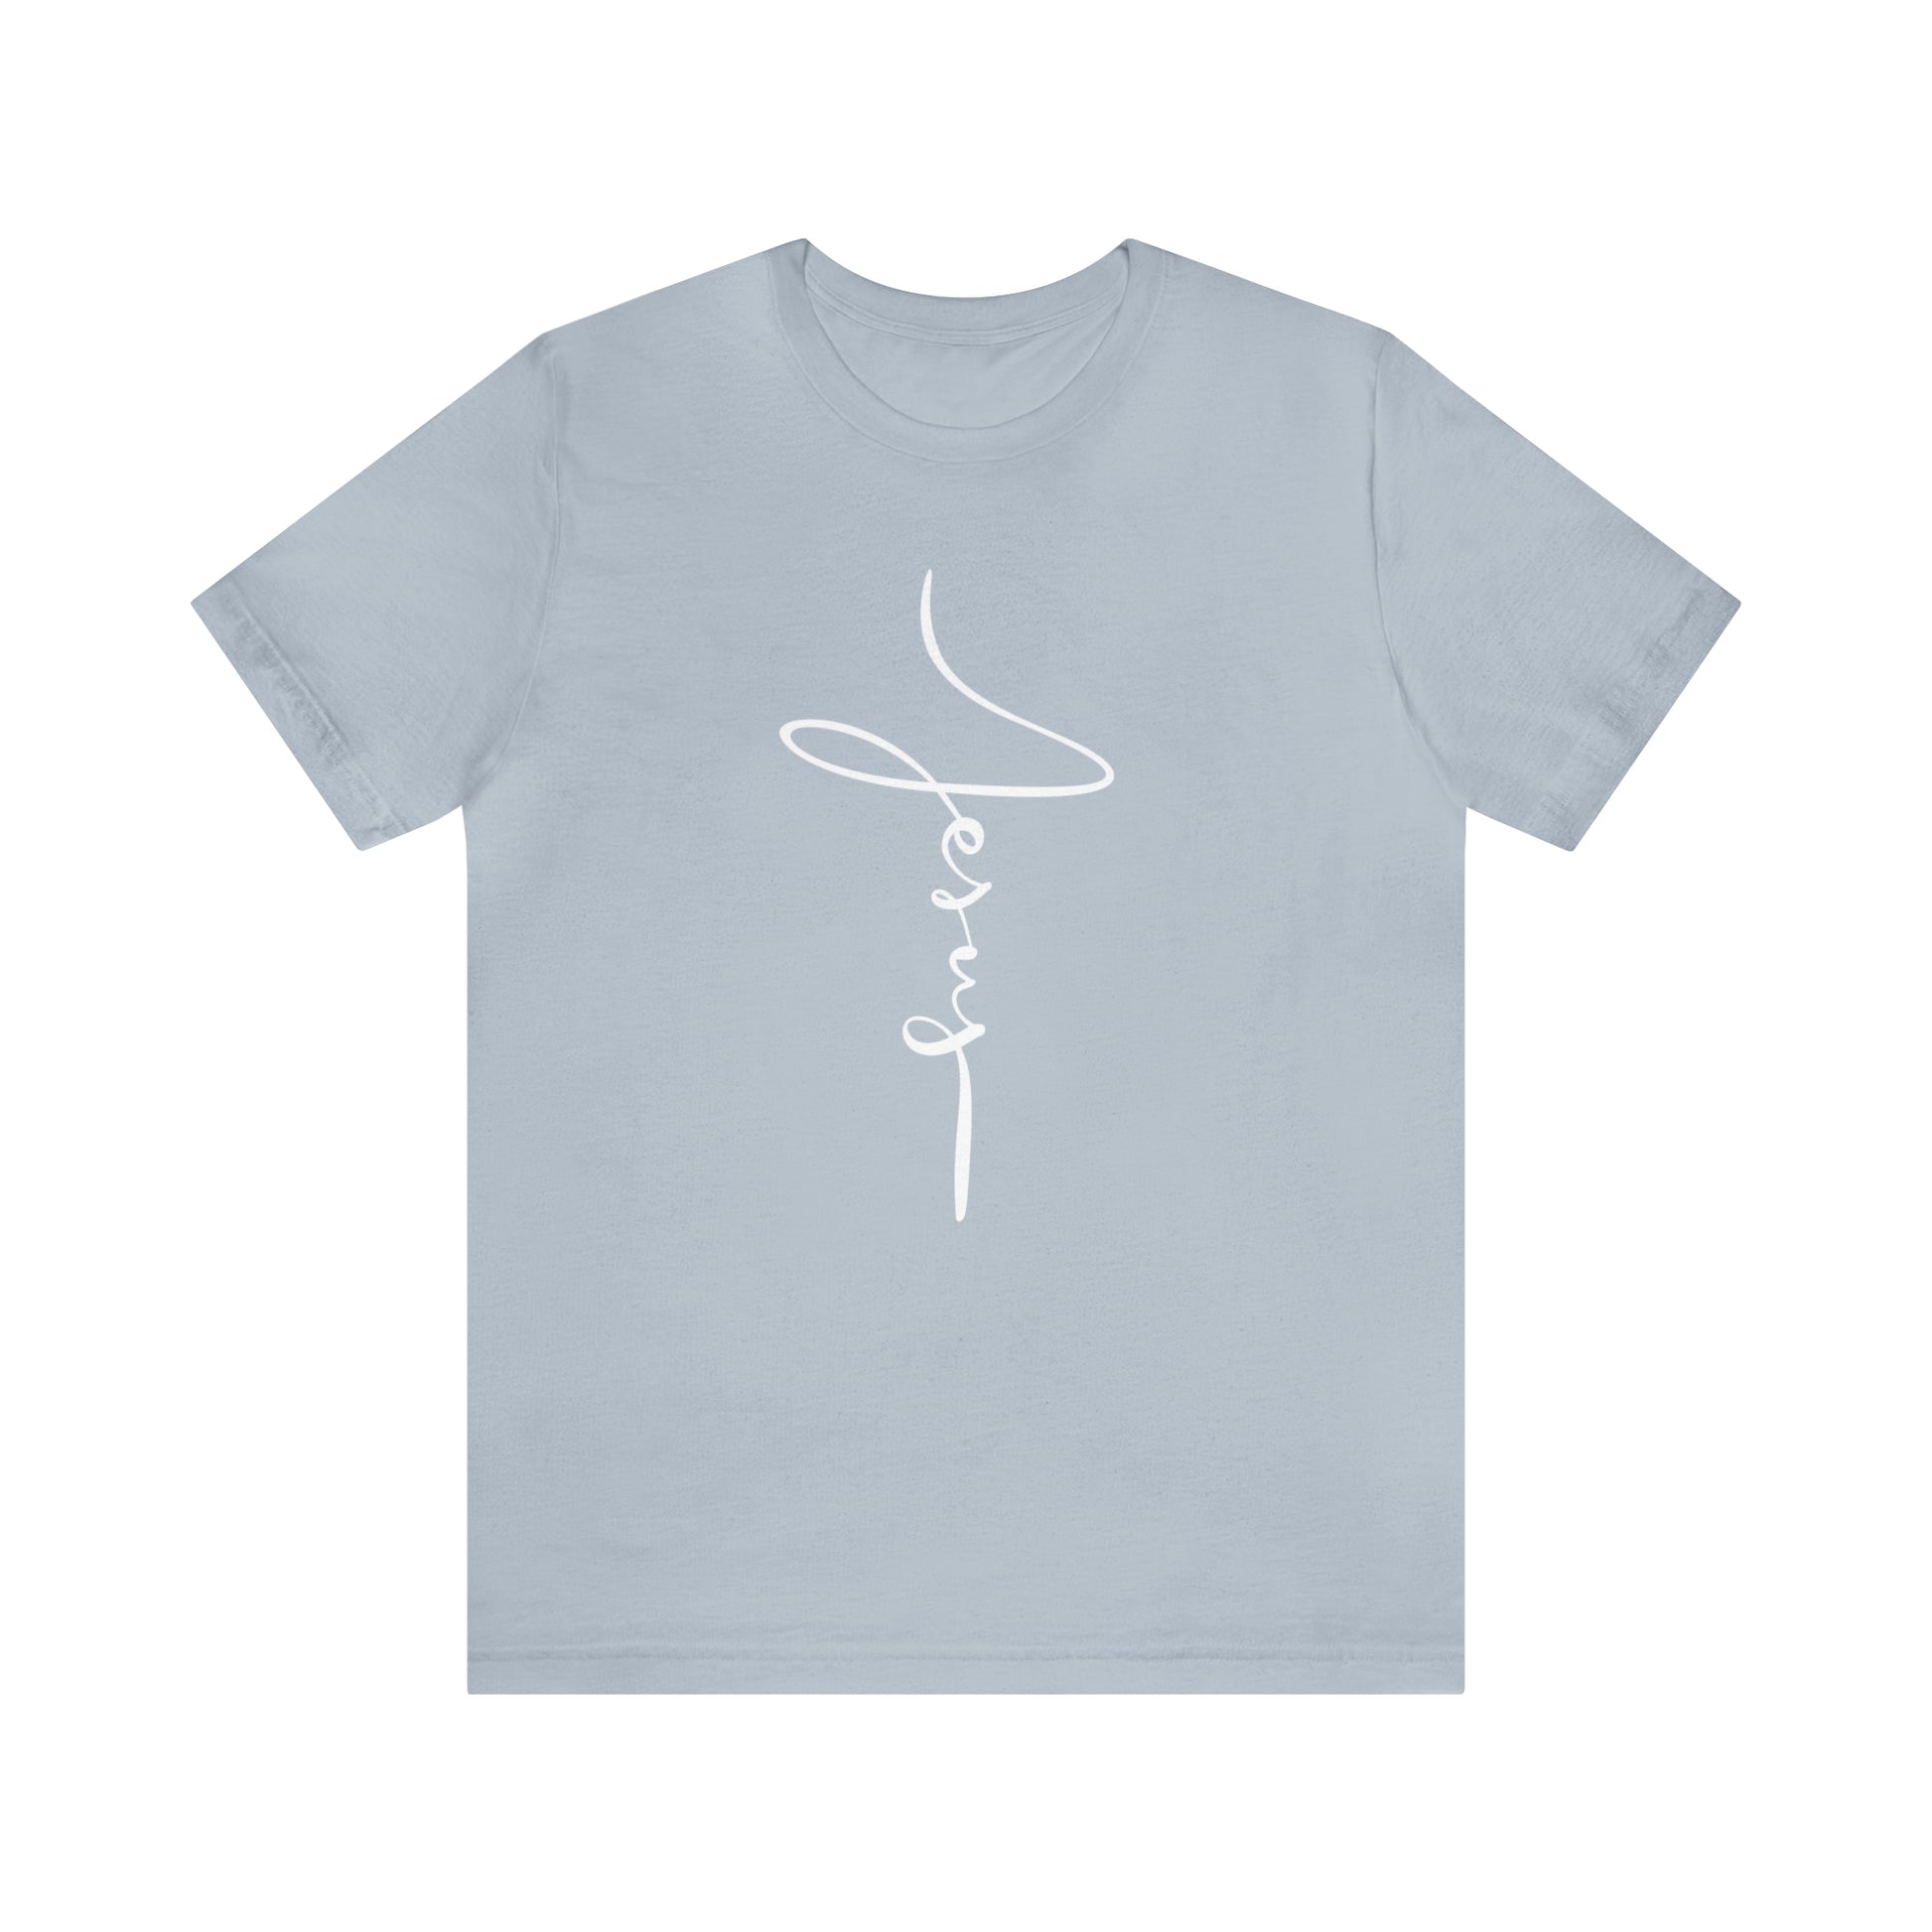 Jesus Cross Christian T-Shirt - Cursive White Font Neutral Color Tees Light Blue mockup